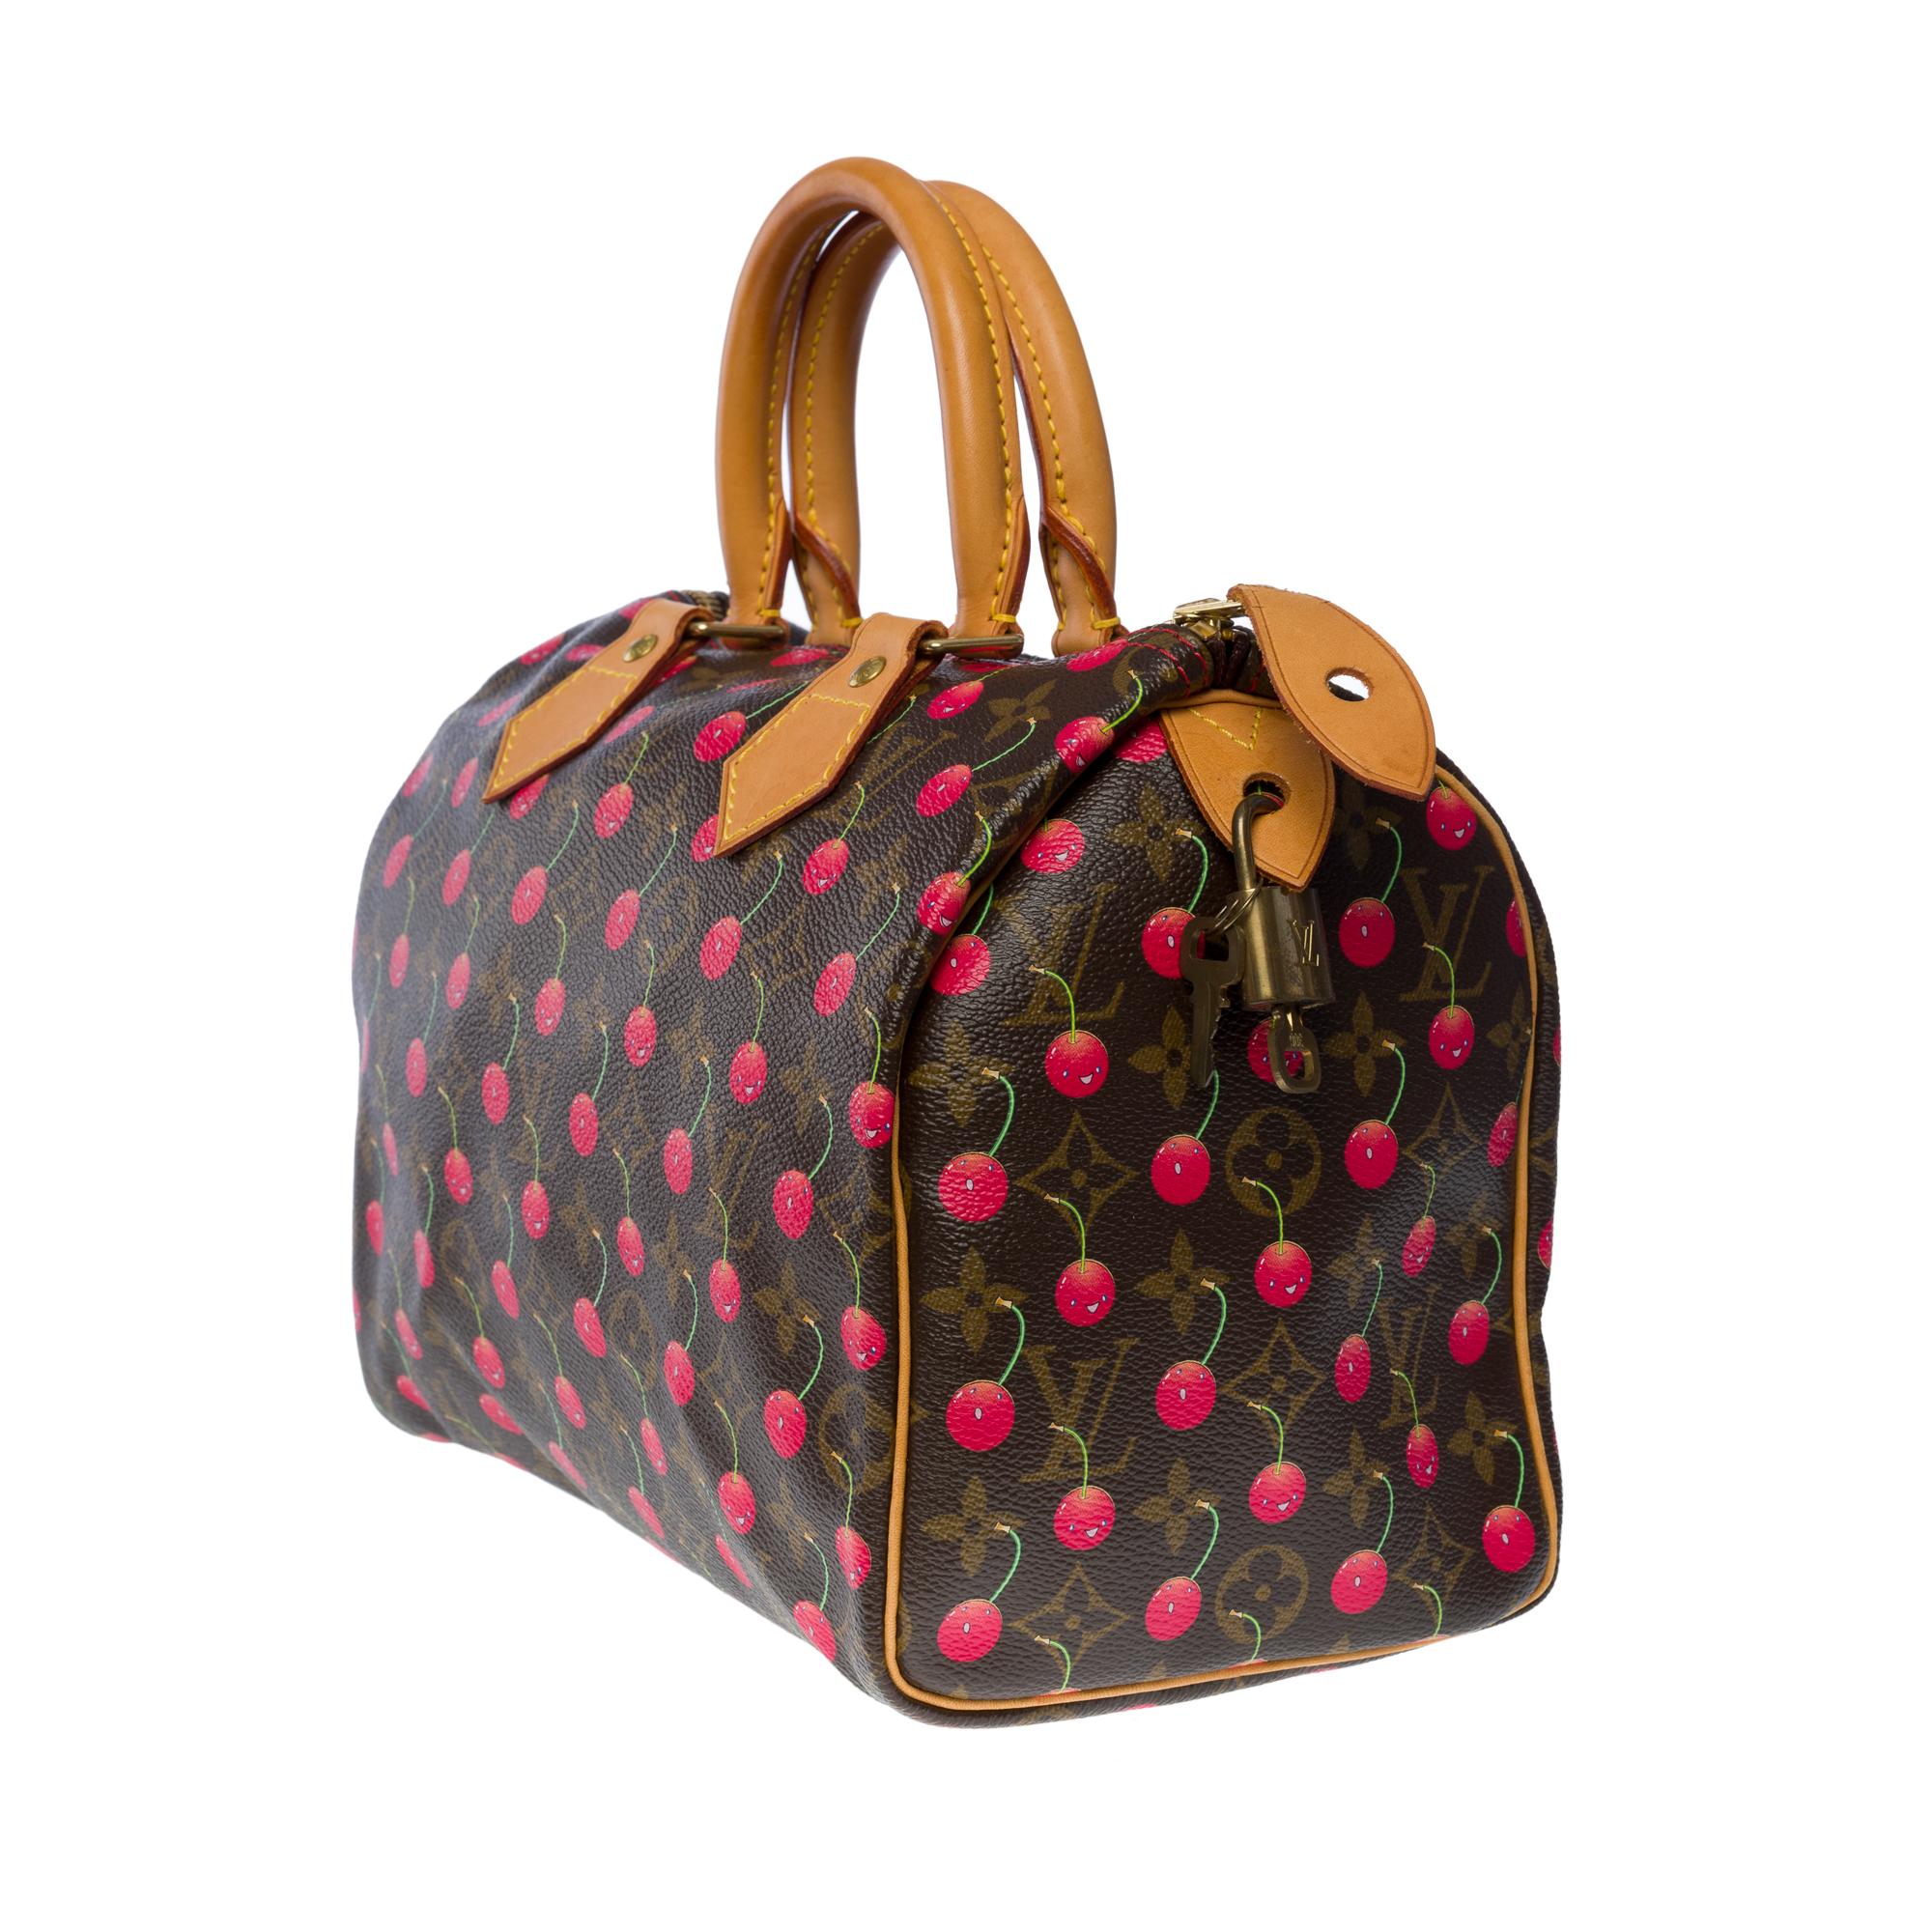 Women's or Men's Louis Vuitton Speedy 25 Murakami limited edition handbag in brown canvas, GHW